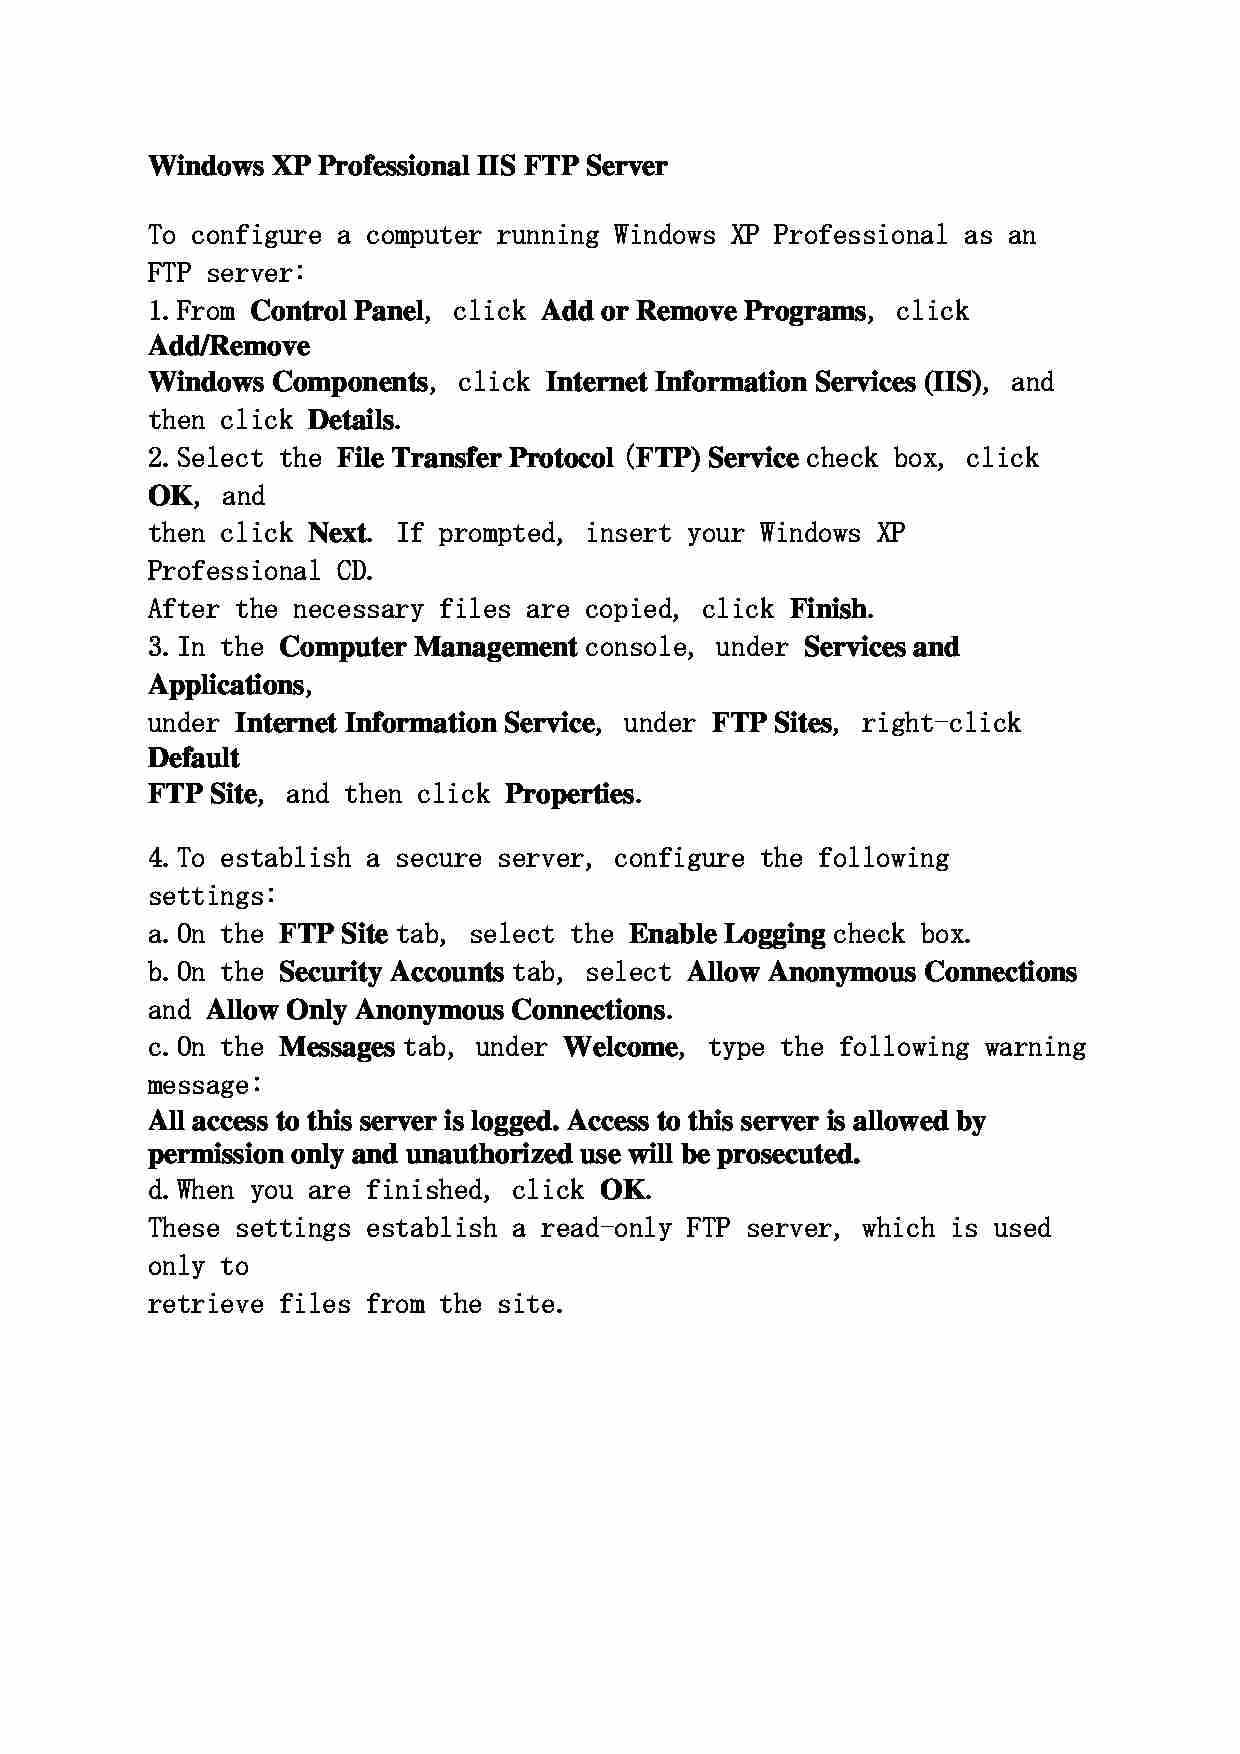 Windows XP Professional IIS FTP Server - strona 1